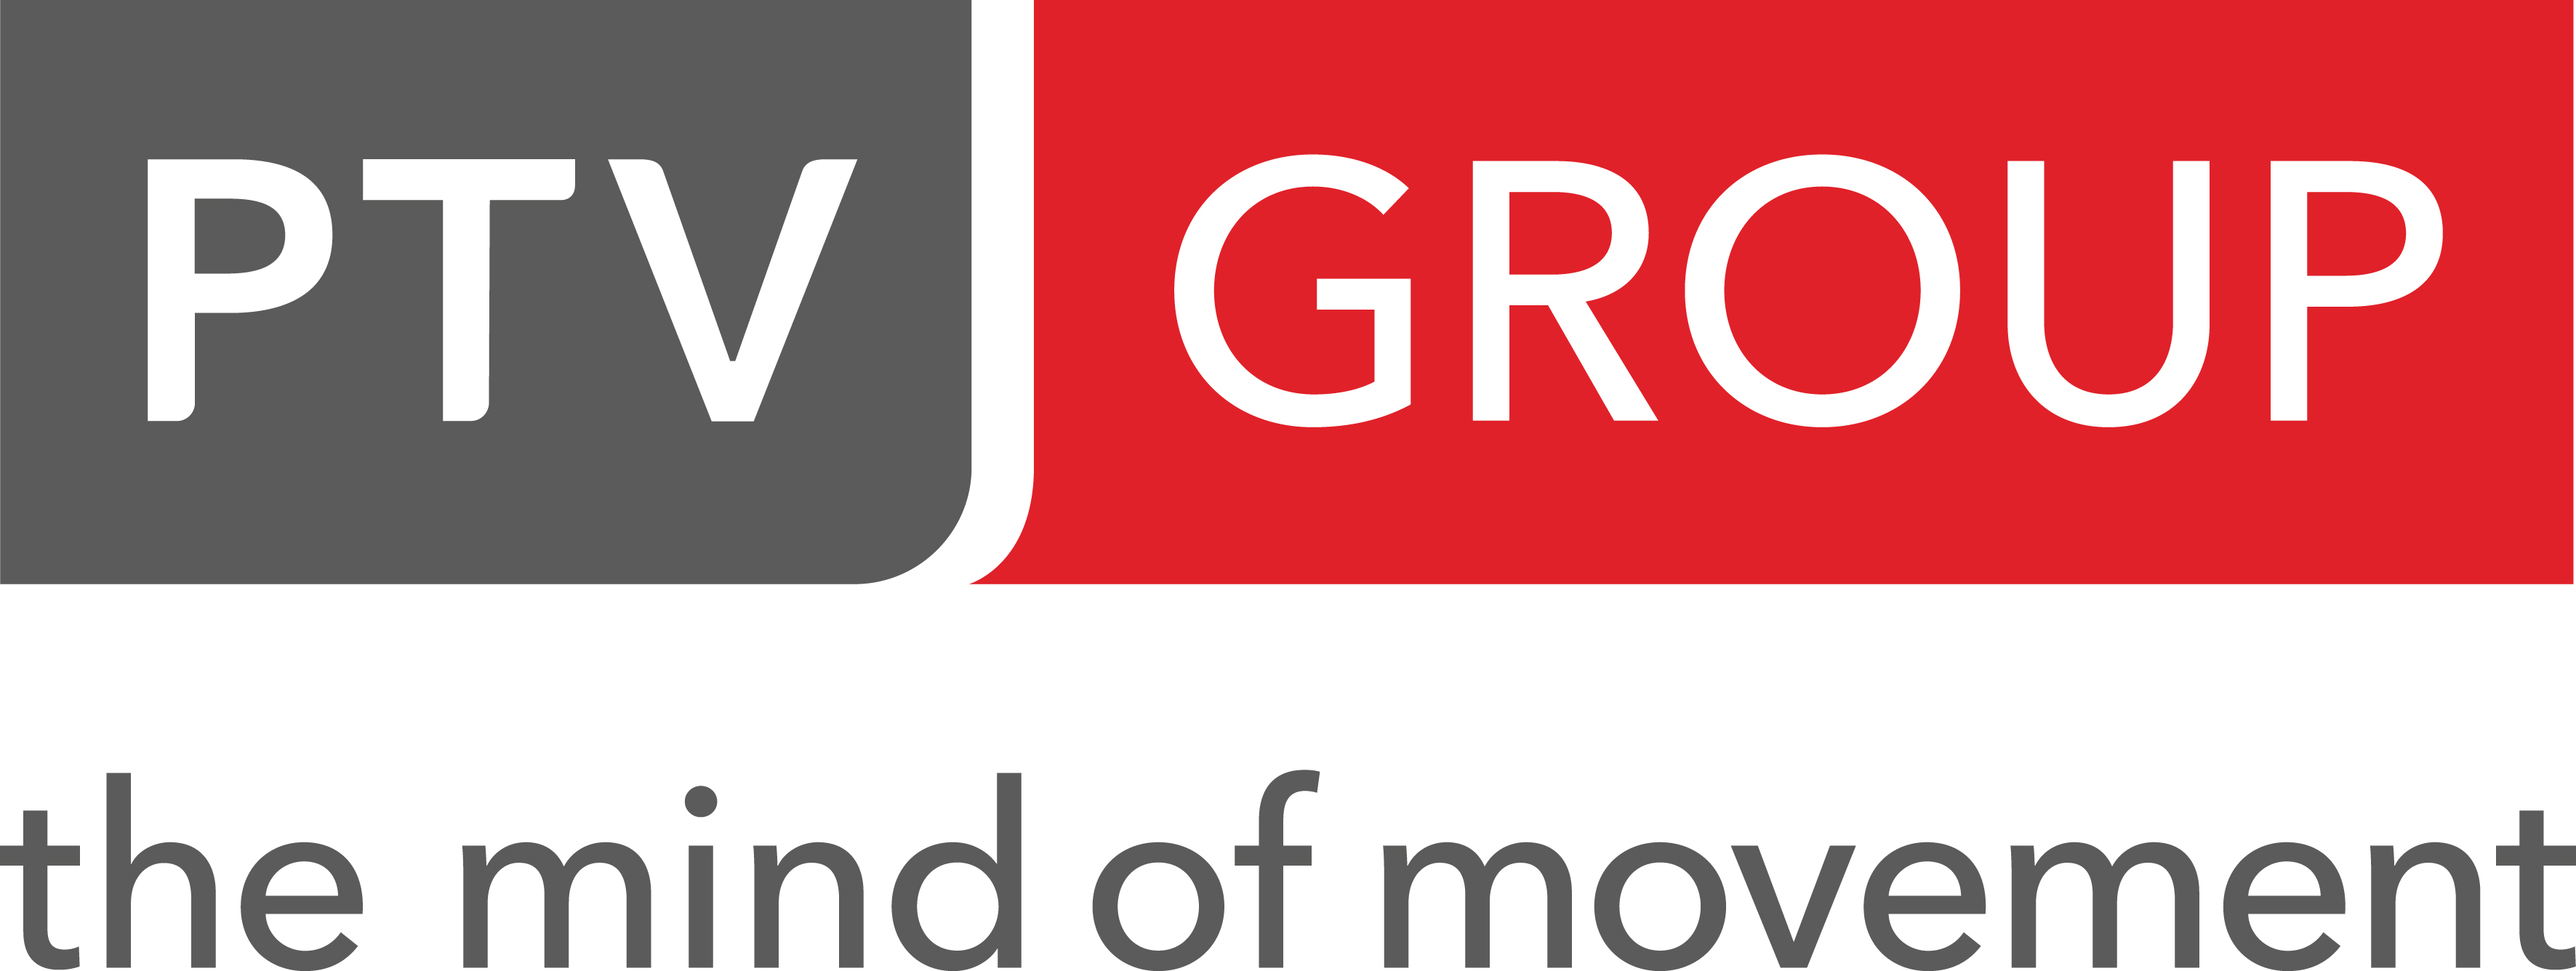 PTV Group Logo 300dpi 01